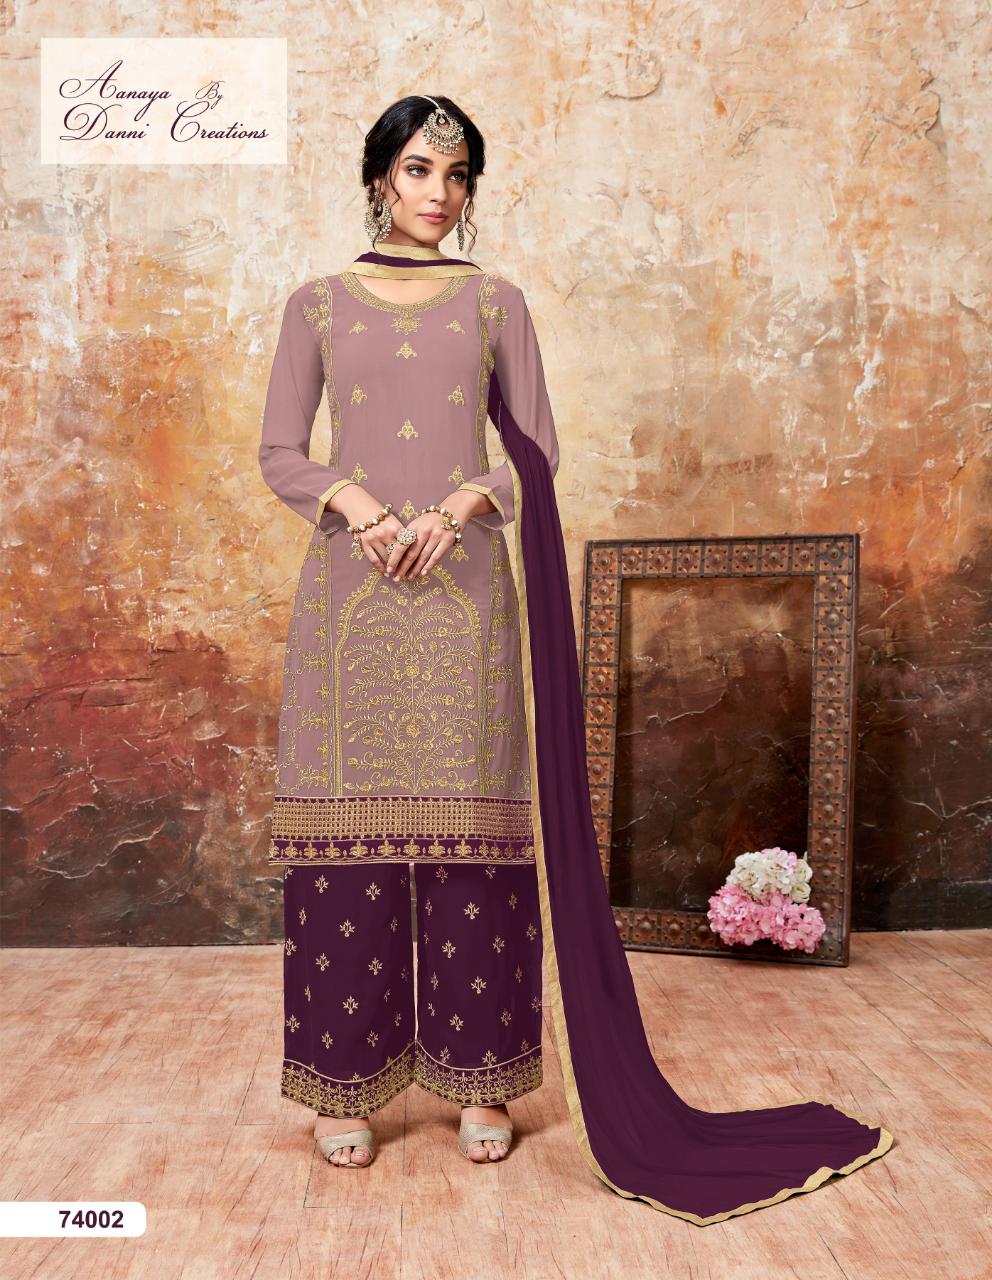 Twisha aanaya 74000 series heavy embroidered salwar kameez collection dealer